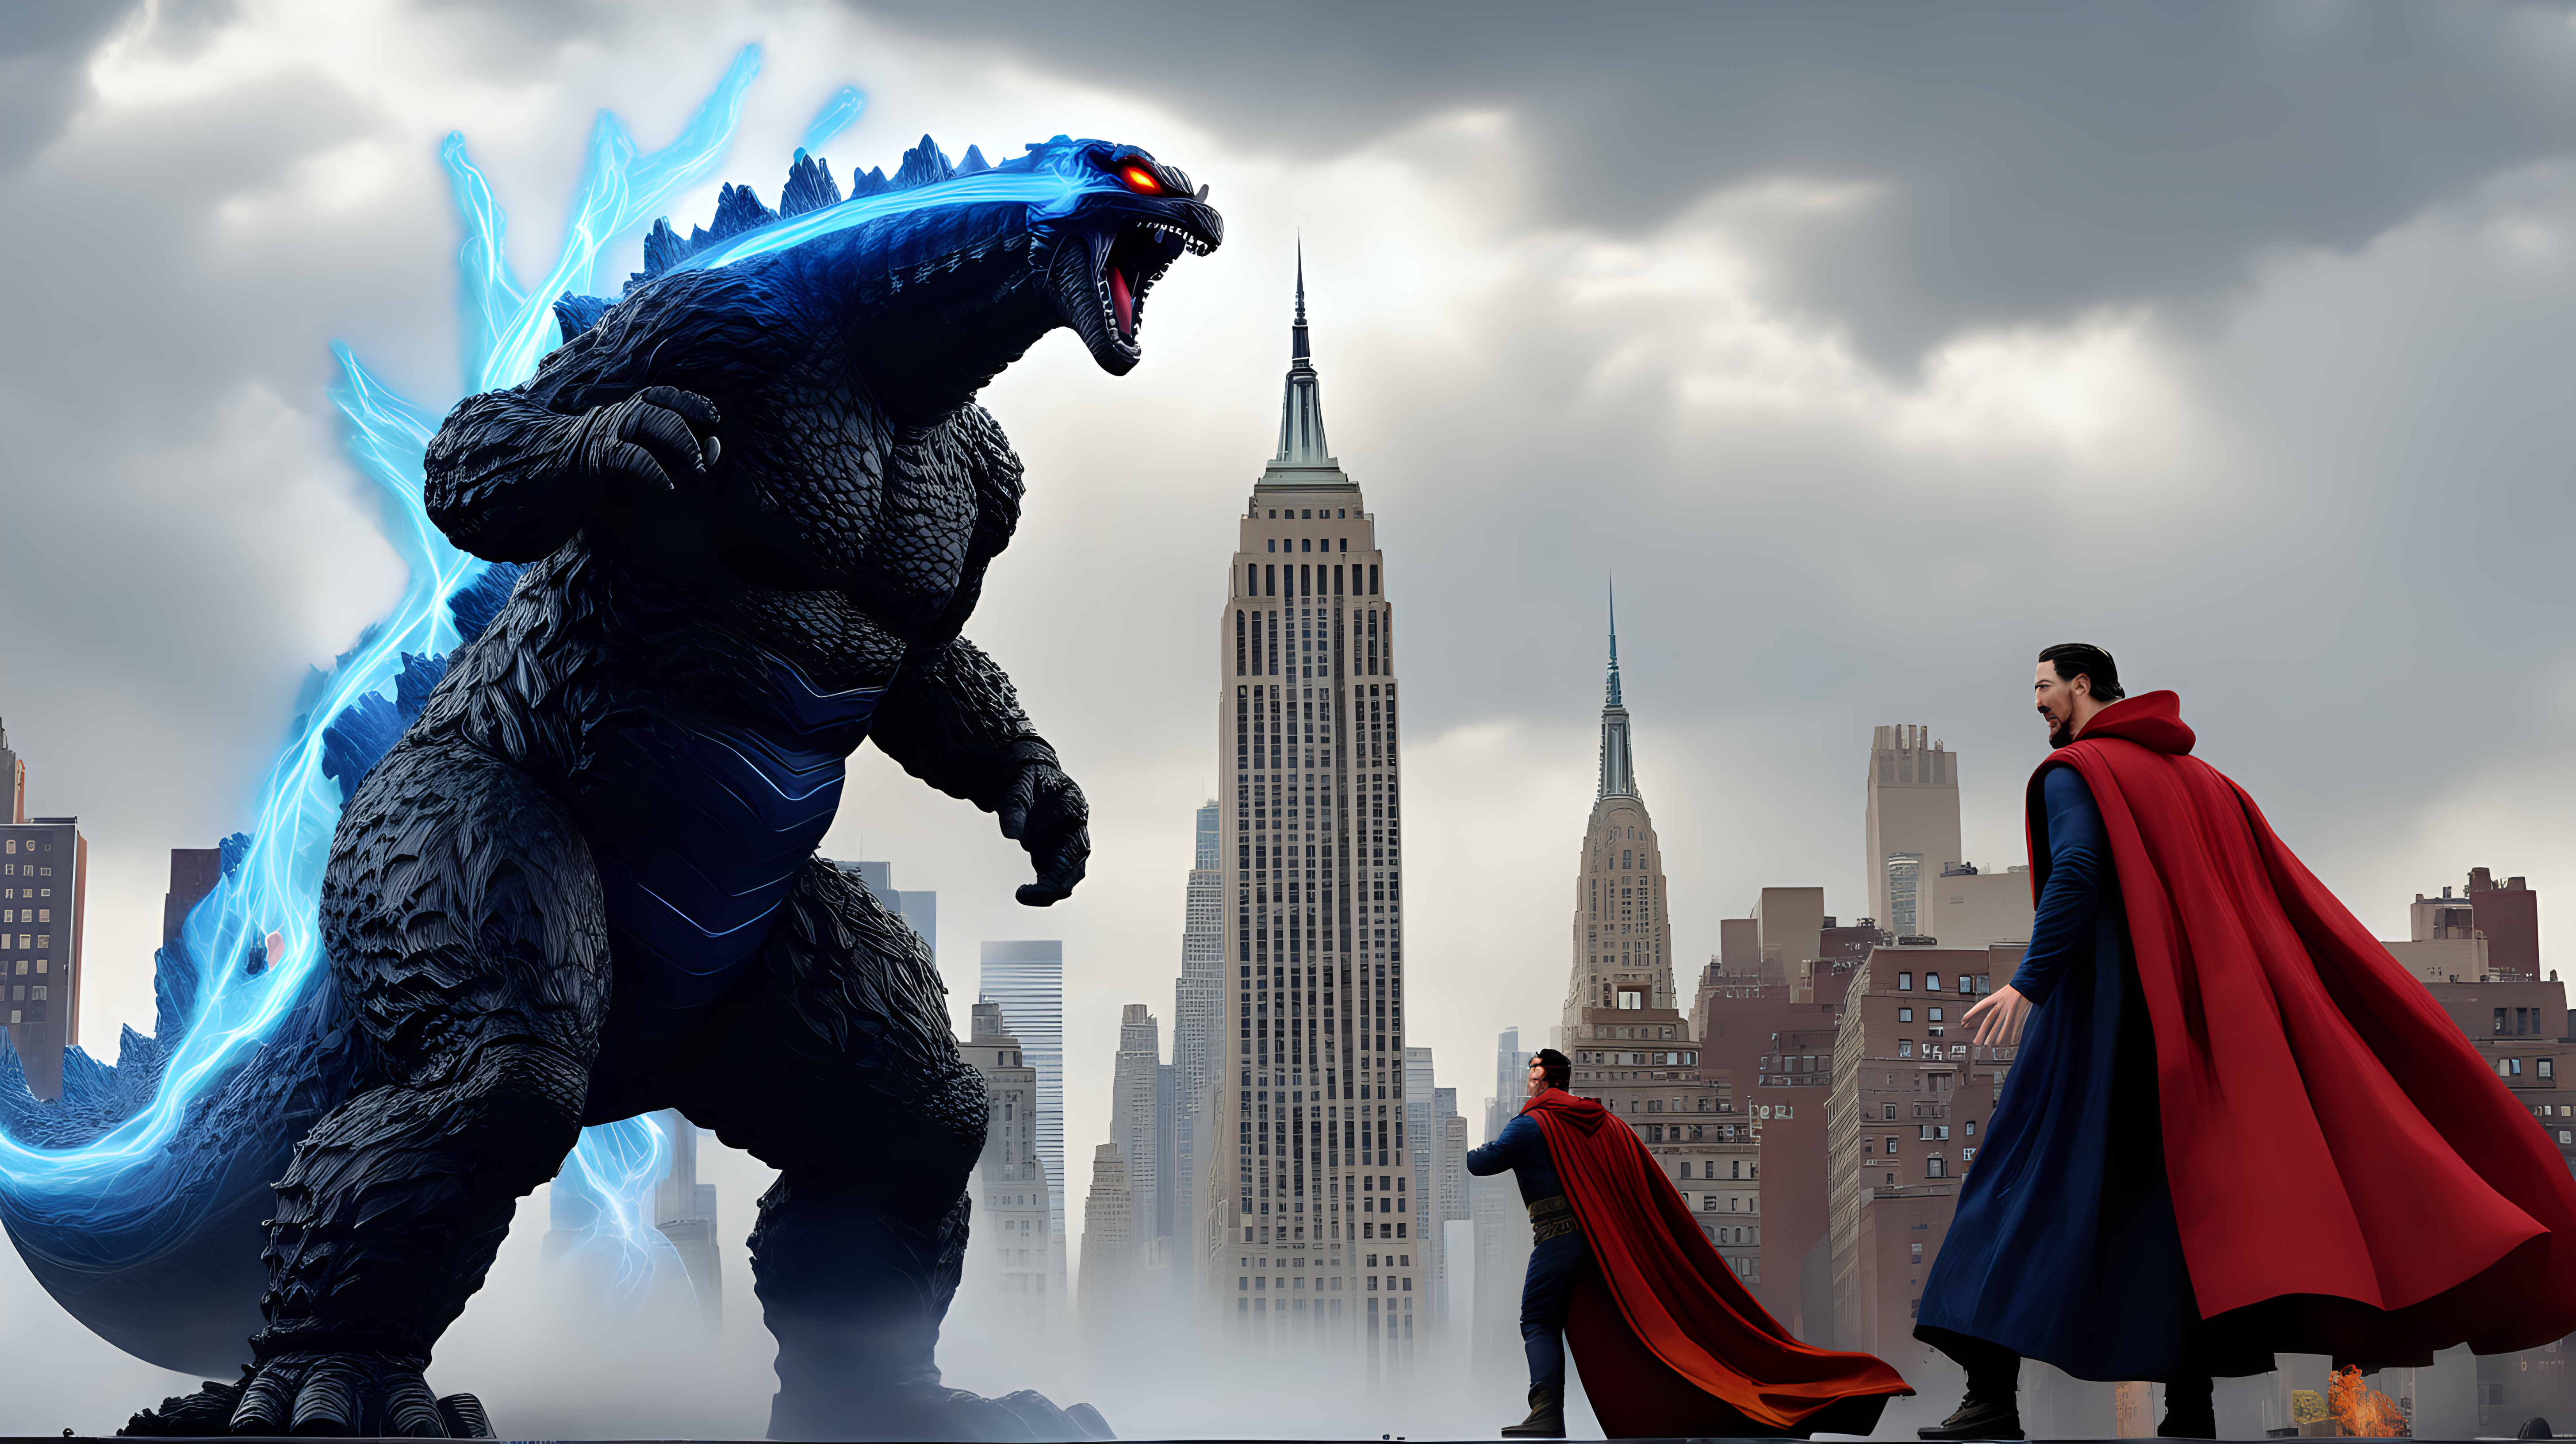 Godzilla fighting Doctor Strange in NYC